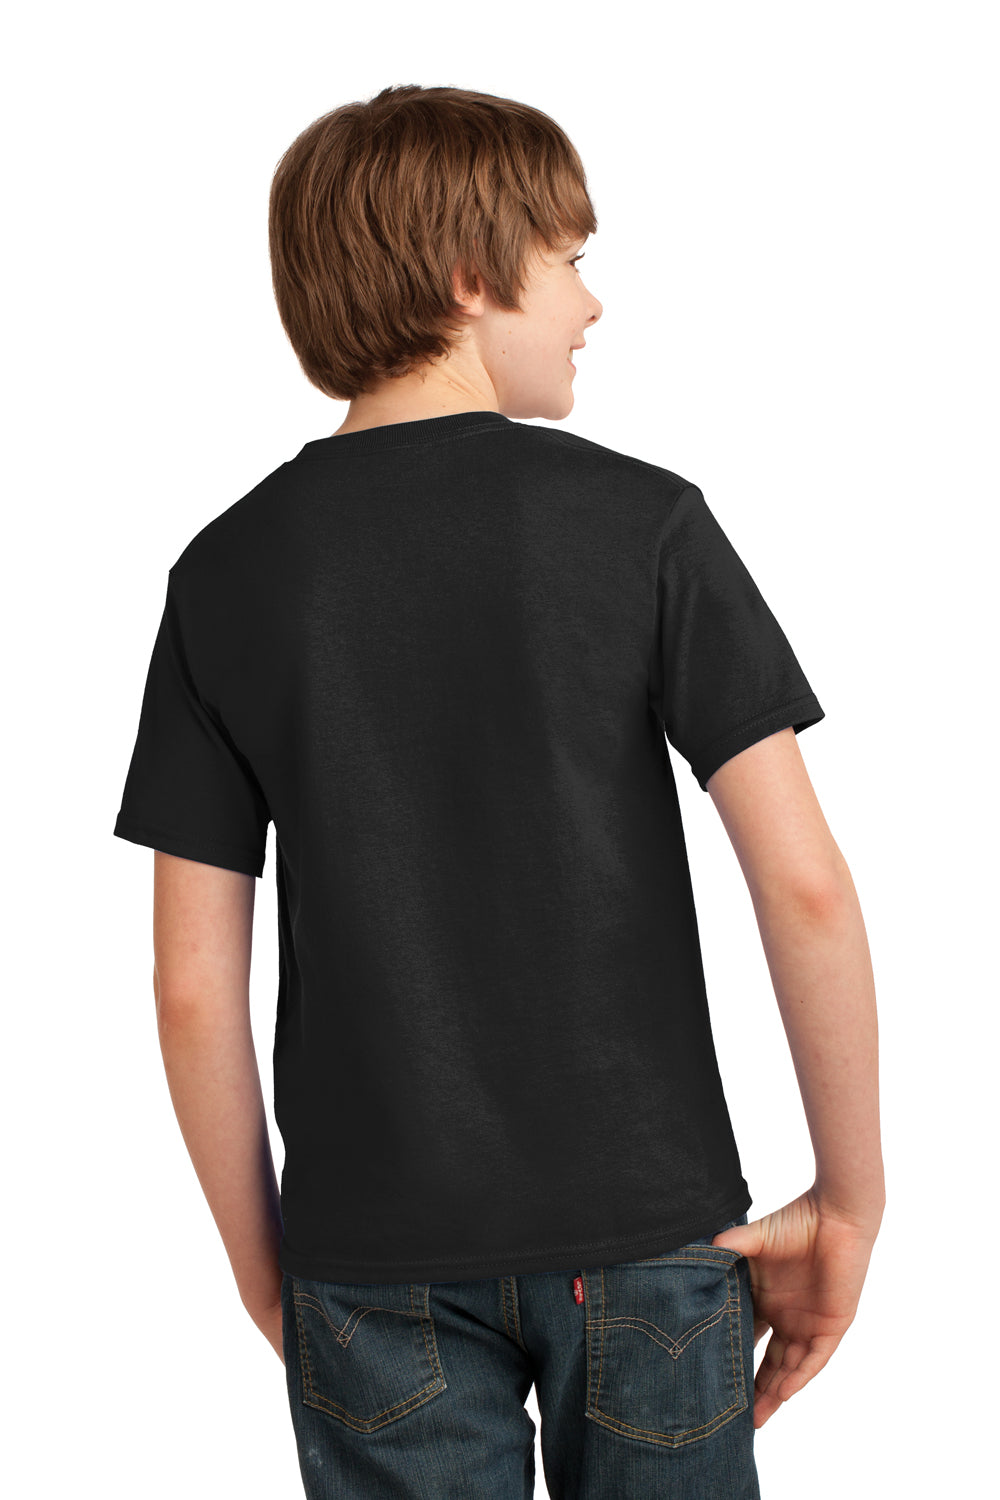 Port & Company PC61Y Youth Essential Short Sleeve Crewneck T-Shirt Black Back